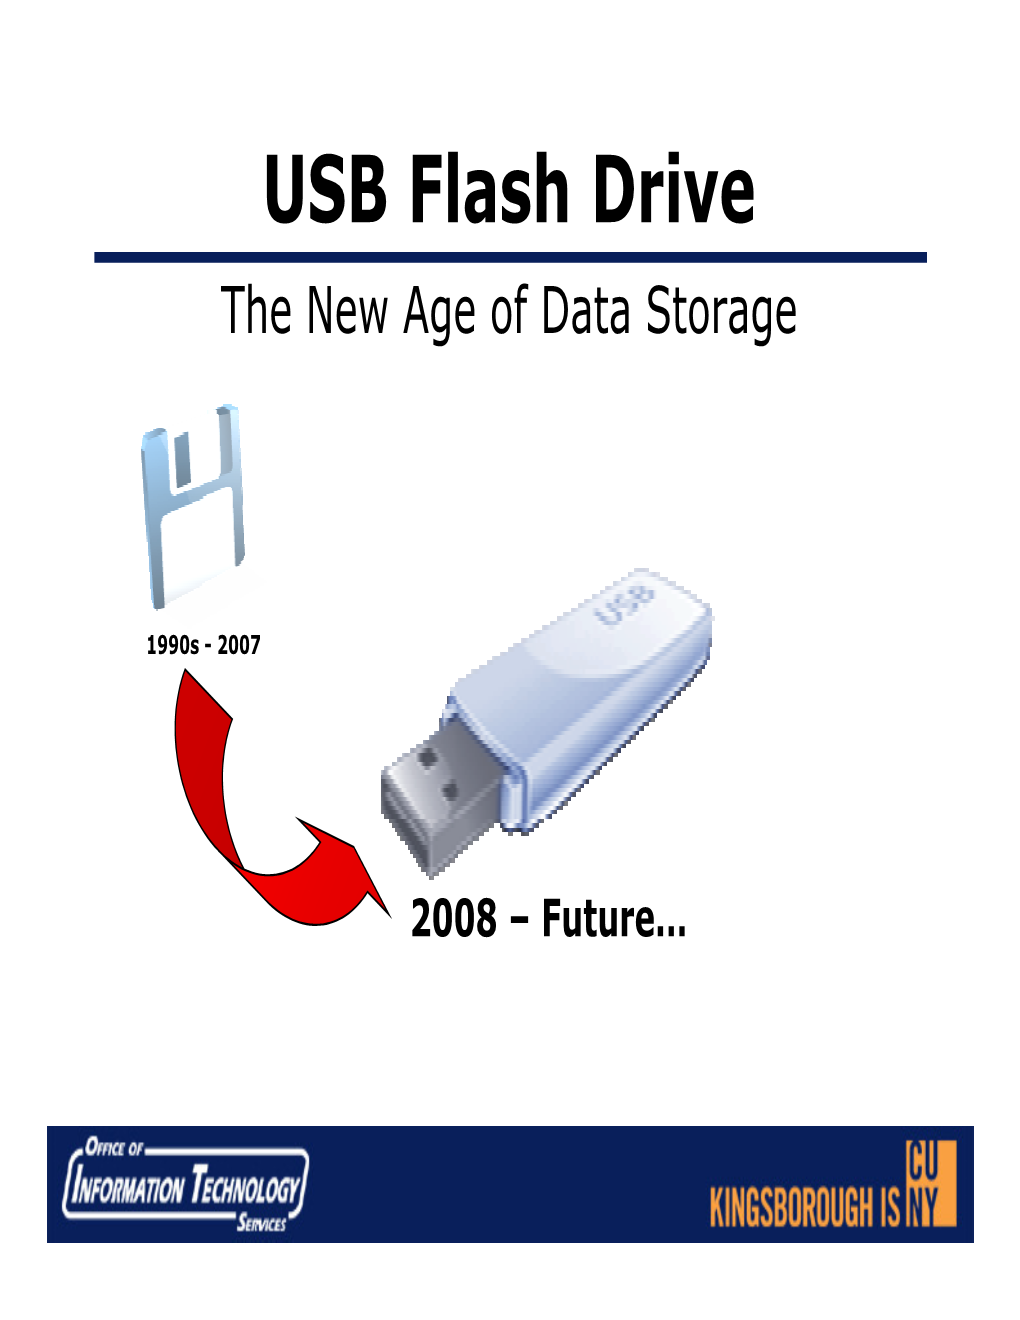 USB Flash Drive the New Age of Data Storage